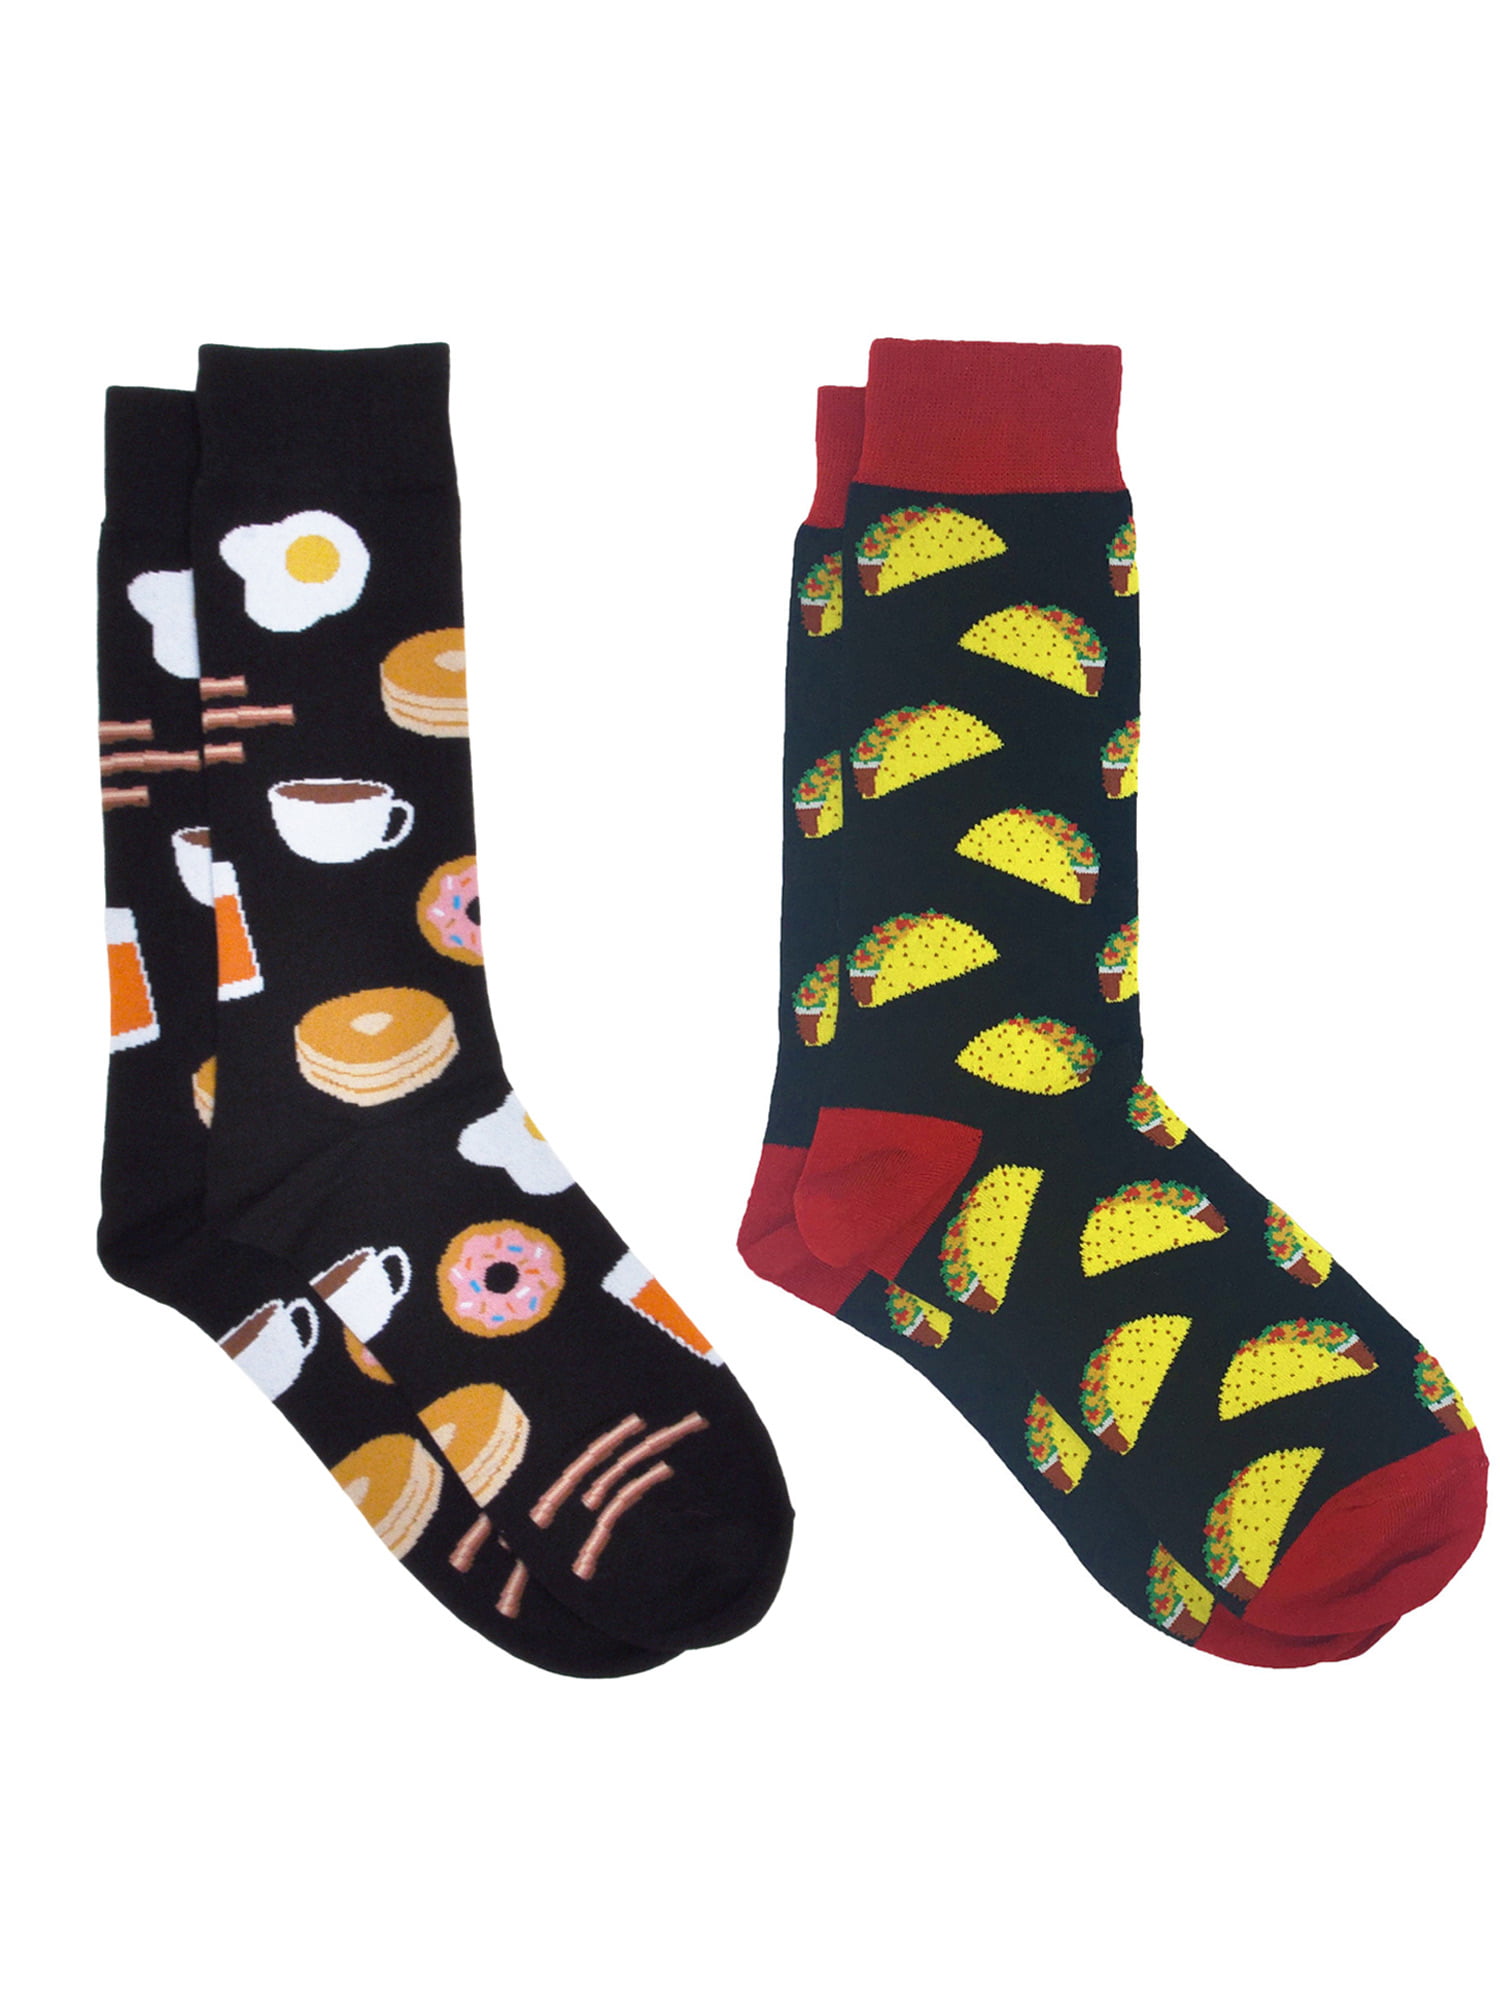 Men's Breakfast Foods Dress Socks & All-Over Taco Food Novelty Socks 2 ...